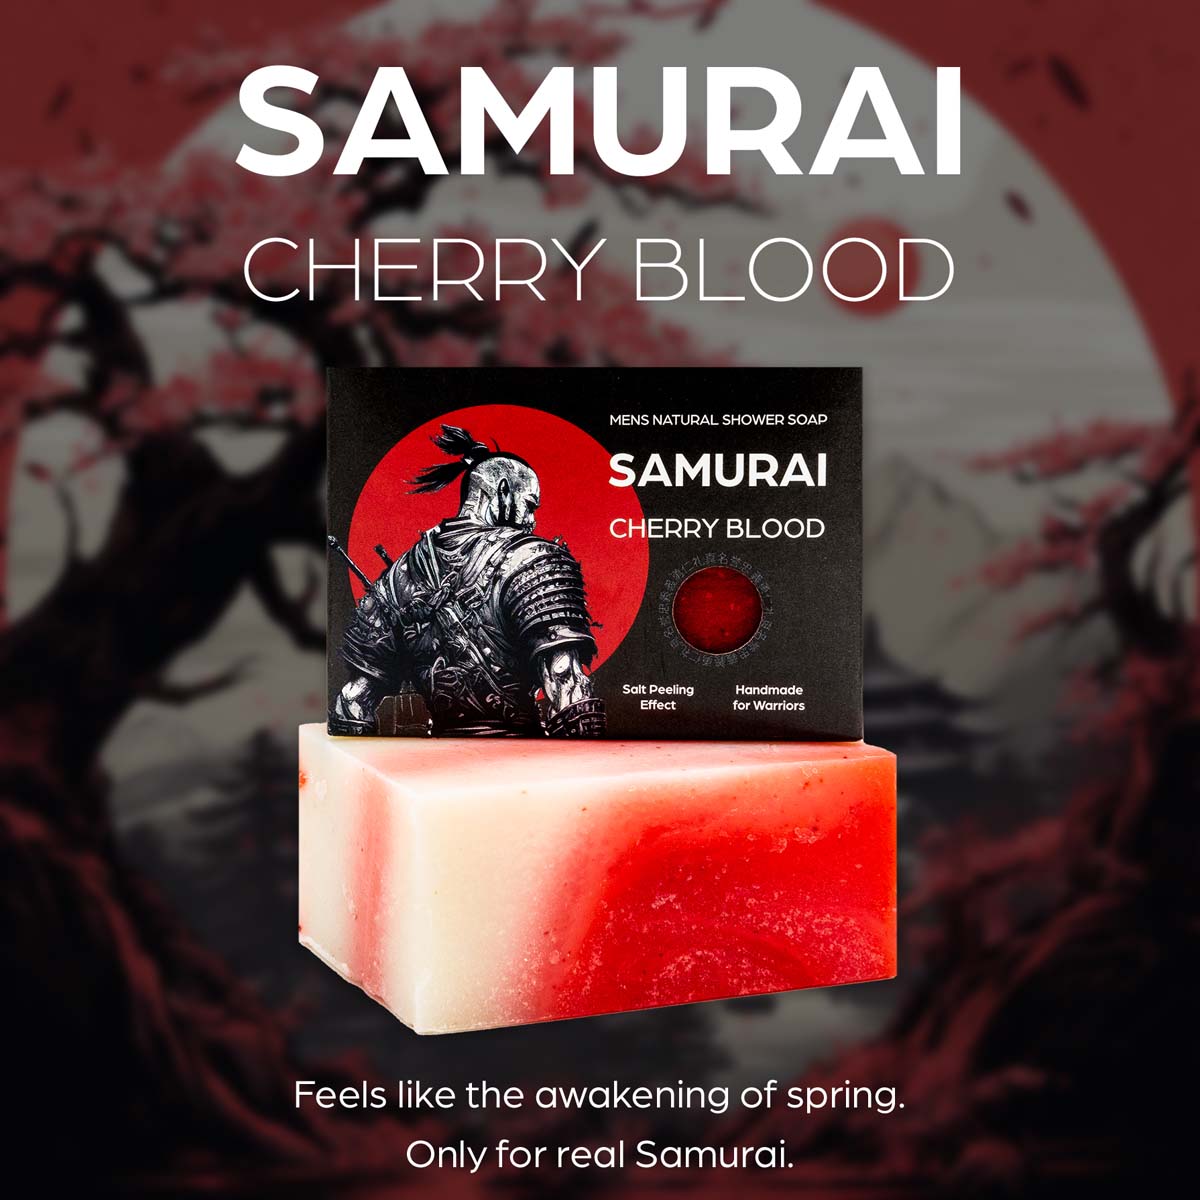 Samurai Cherry Blood Peeling Körperpflege